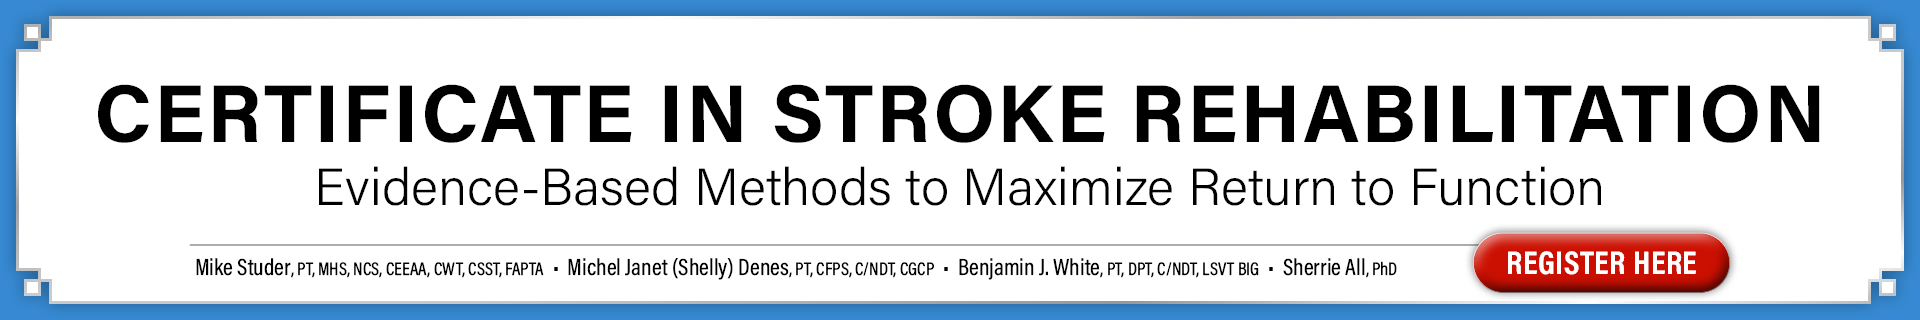 Certificate in Stroke Rehabilitation: Evidence-Based Methods to Maximize Return to Function